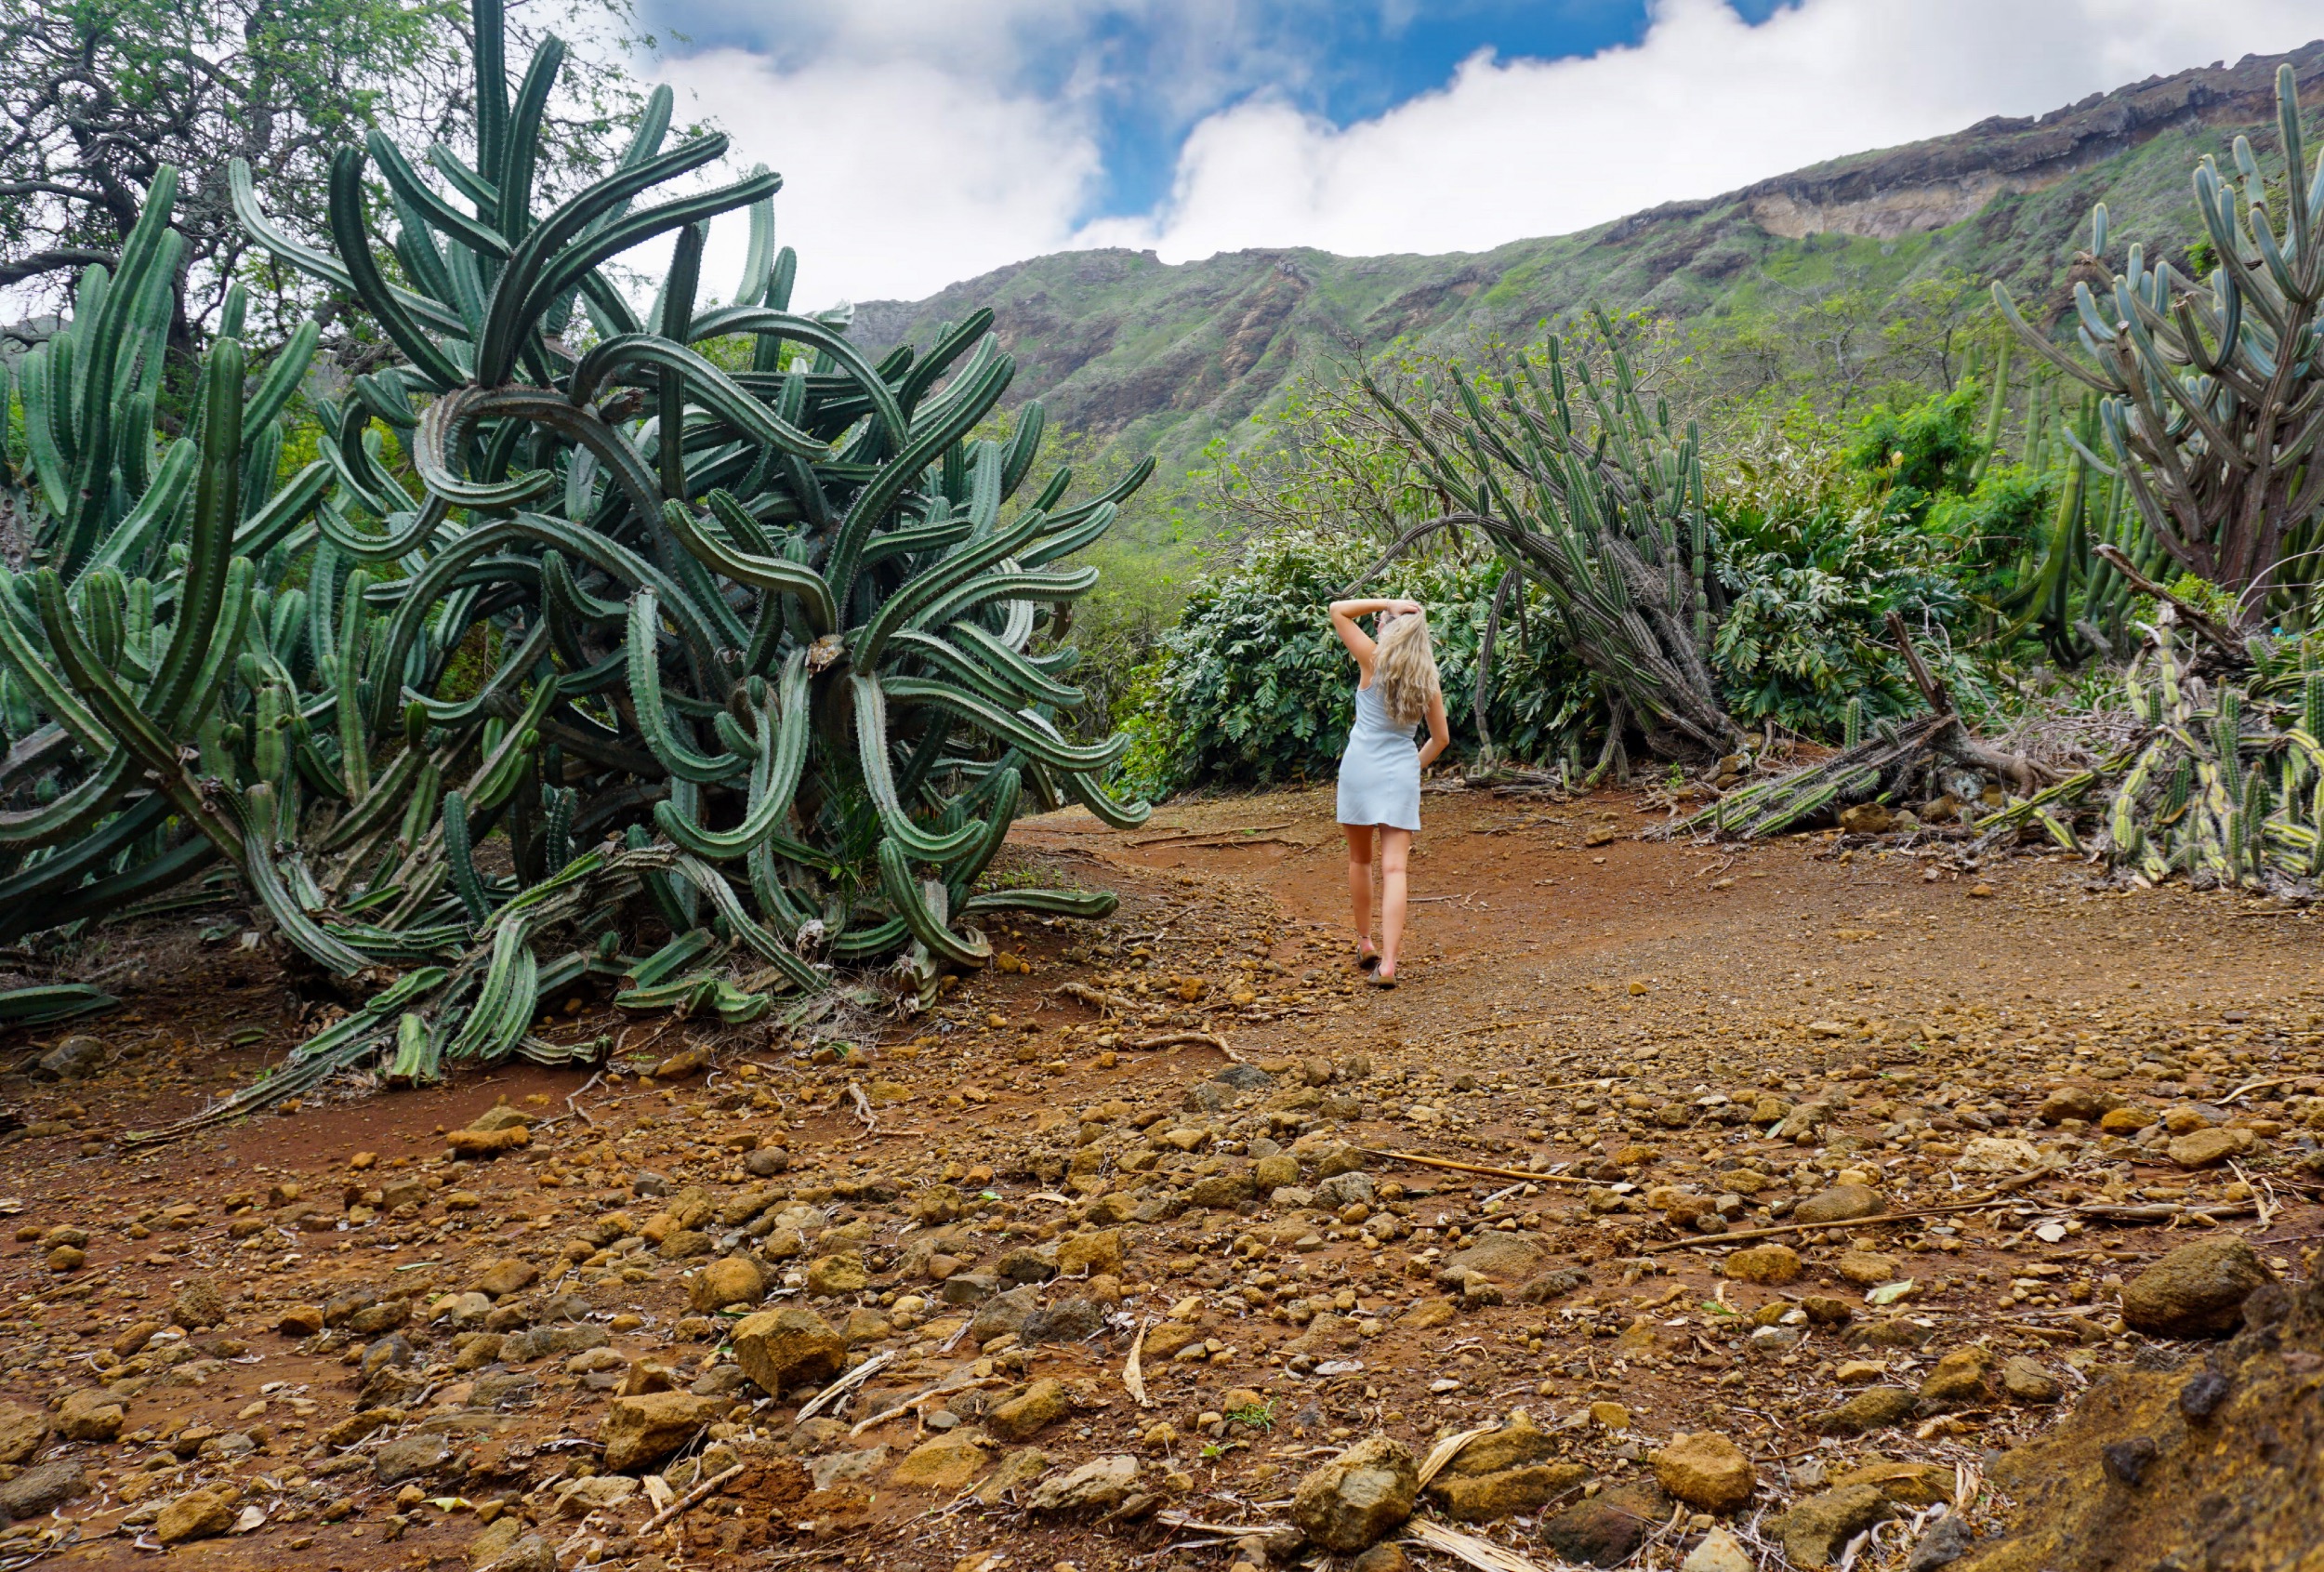 Lauren walking on the dirt path next to Cacti at Koko Botanical Gardens (Oahu, Hawaii)